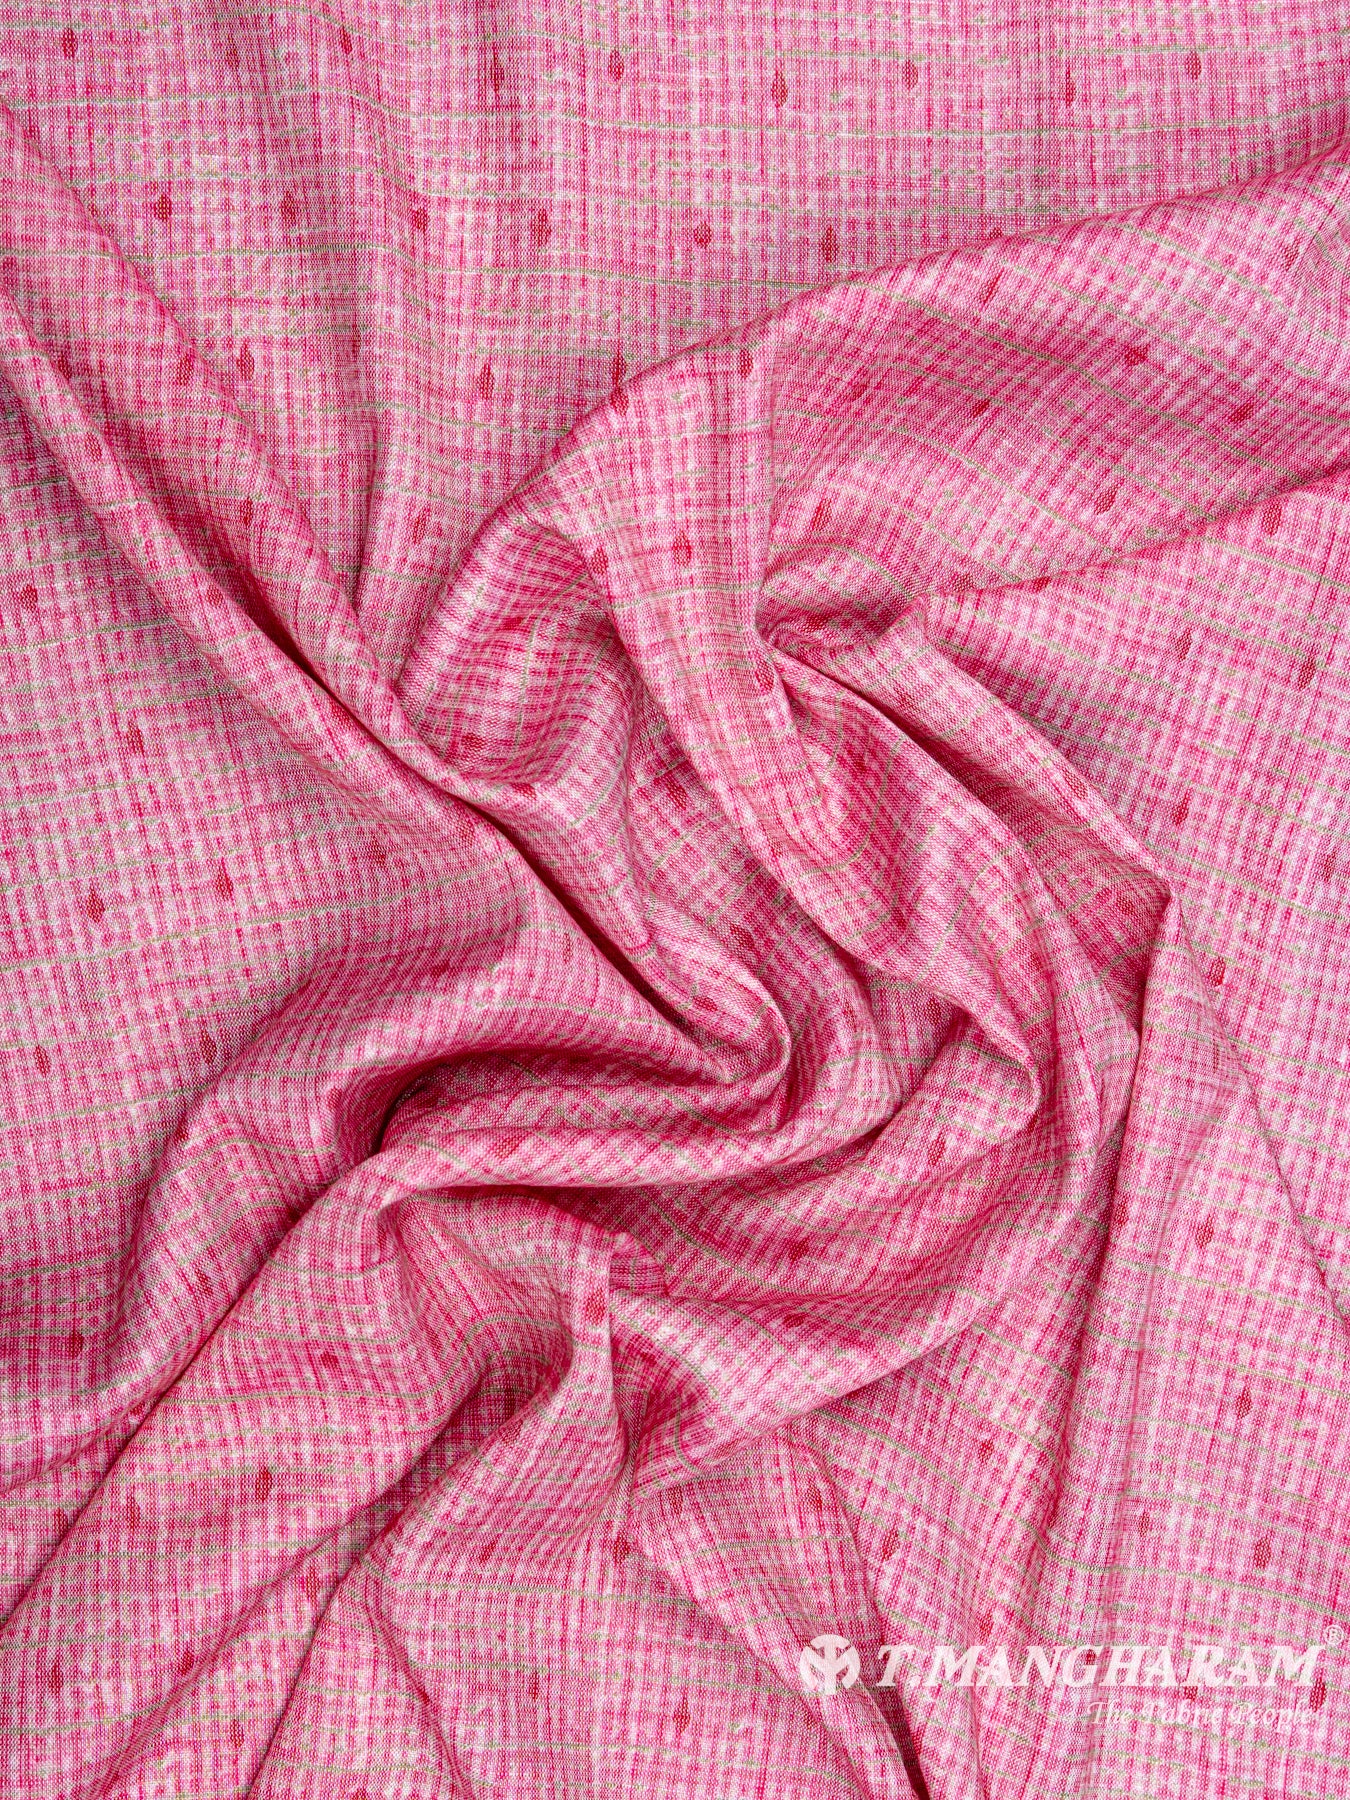 Pink Rayon Cotton Fabric - EC5354 view-4